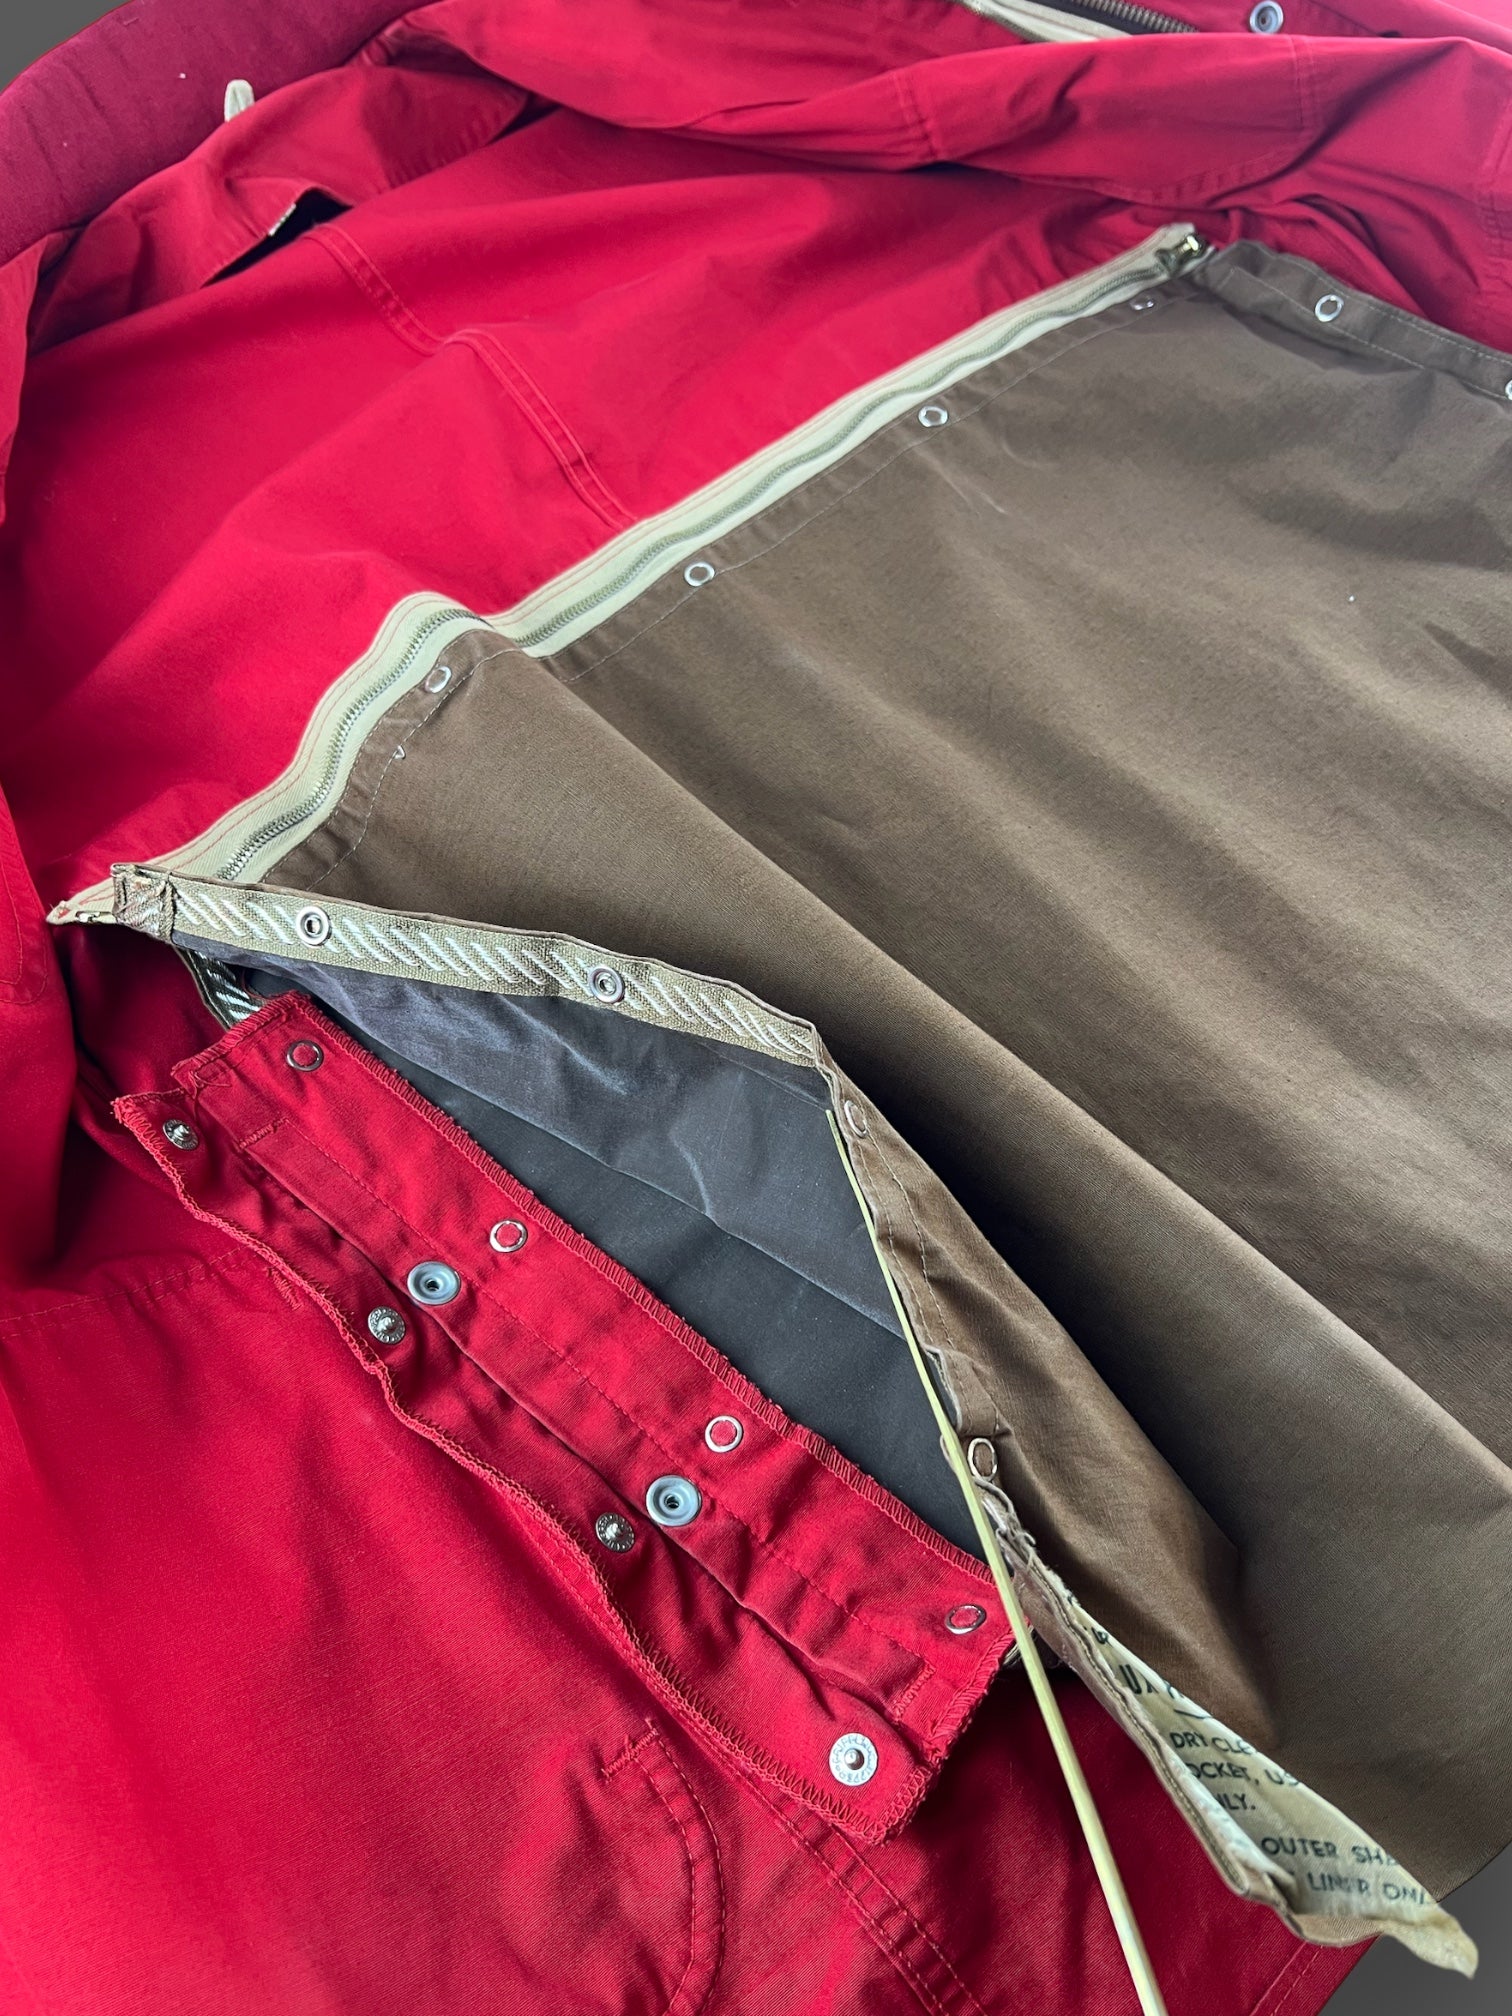 40s/50s Comfy Tri Lux hunting jacket fits L